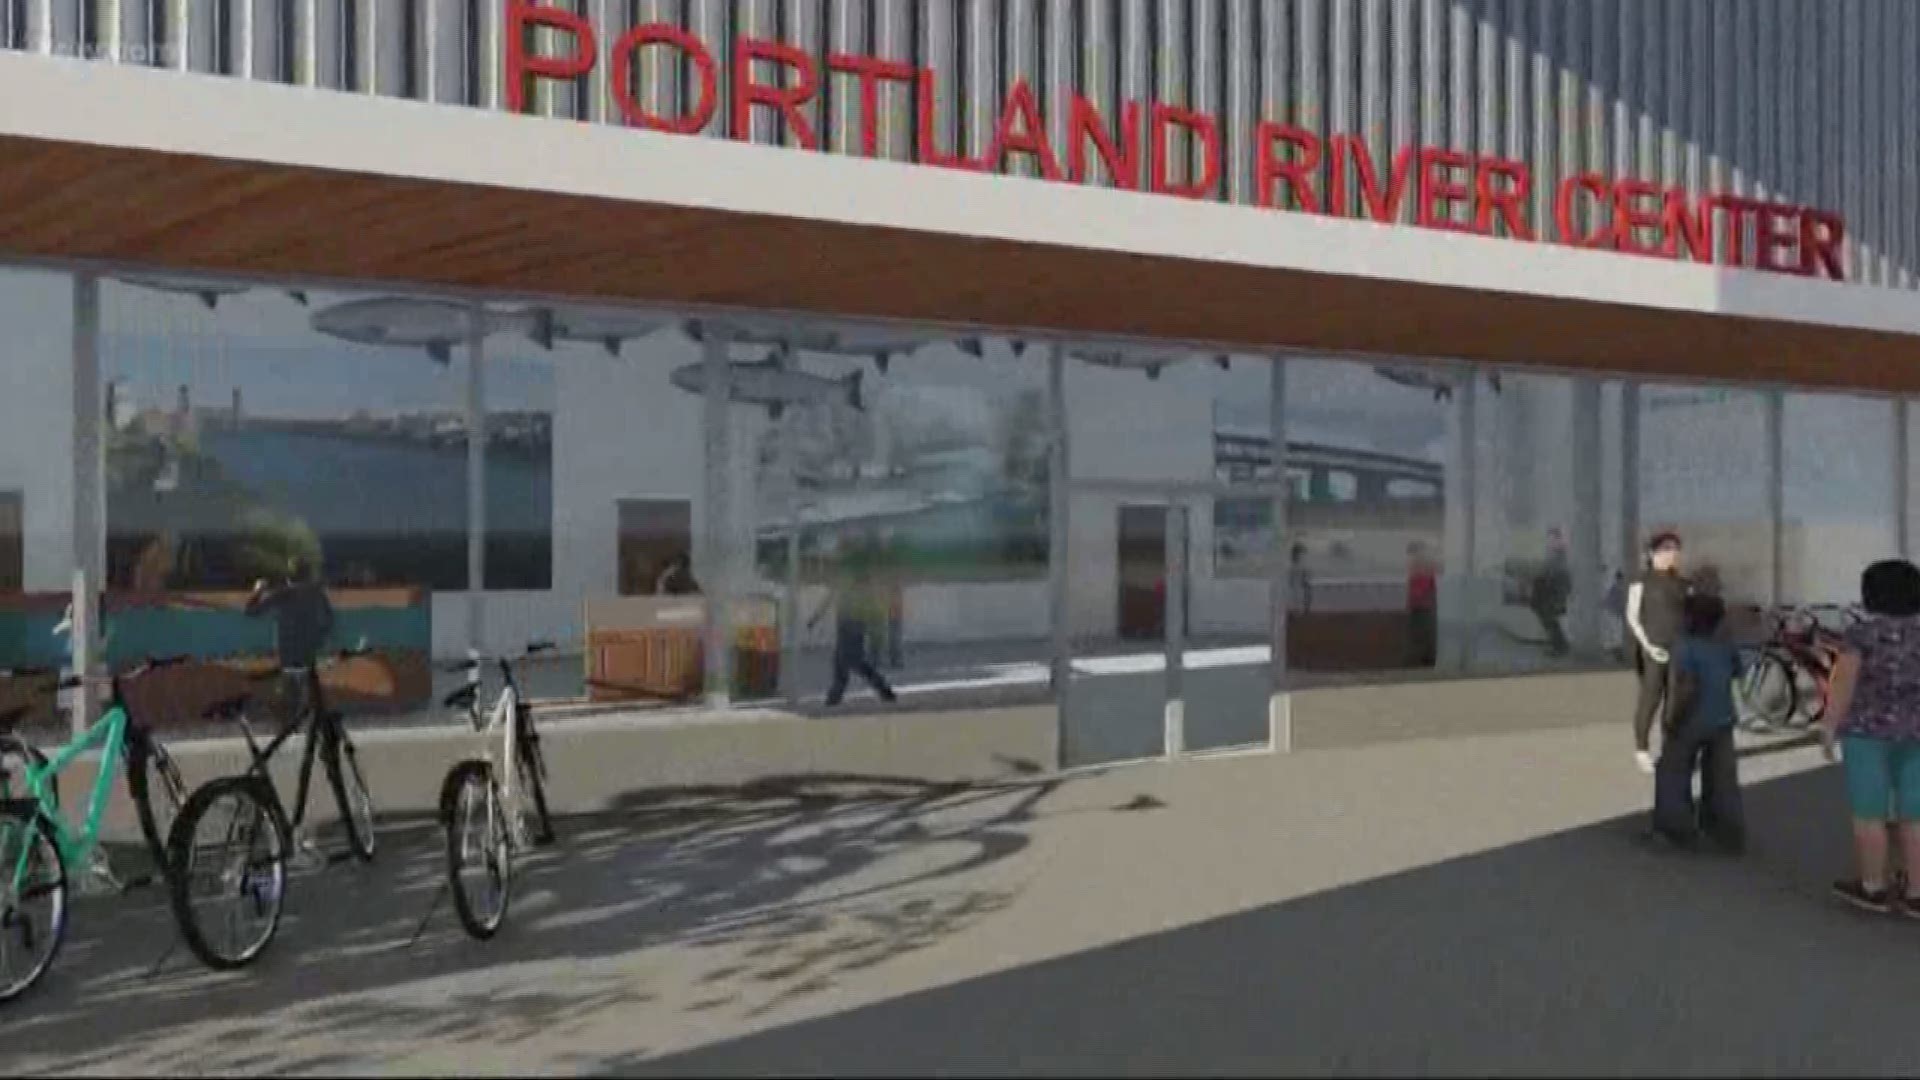 A new Portland River Center concept.